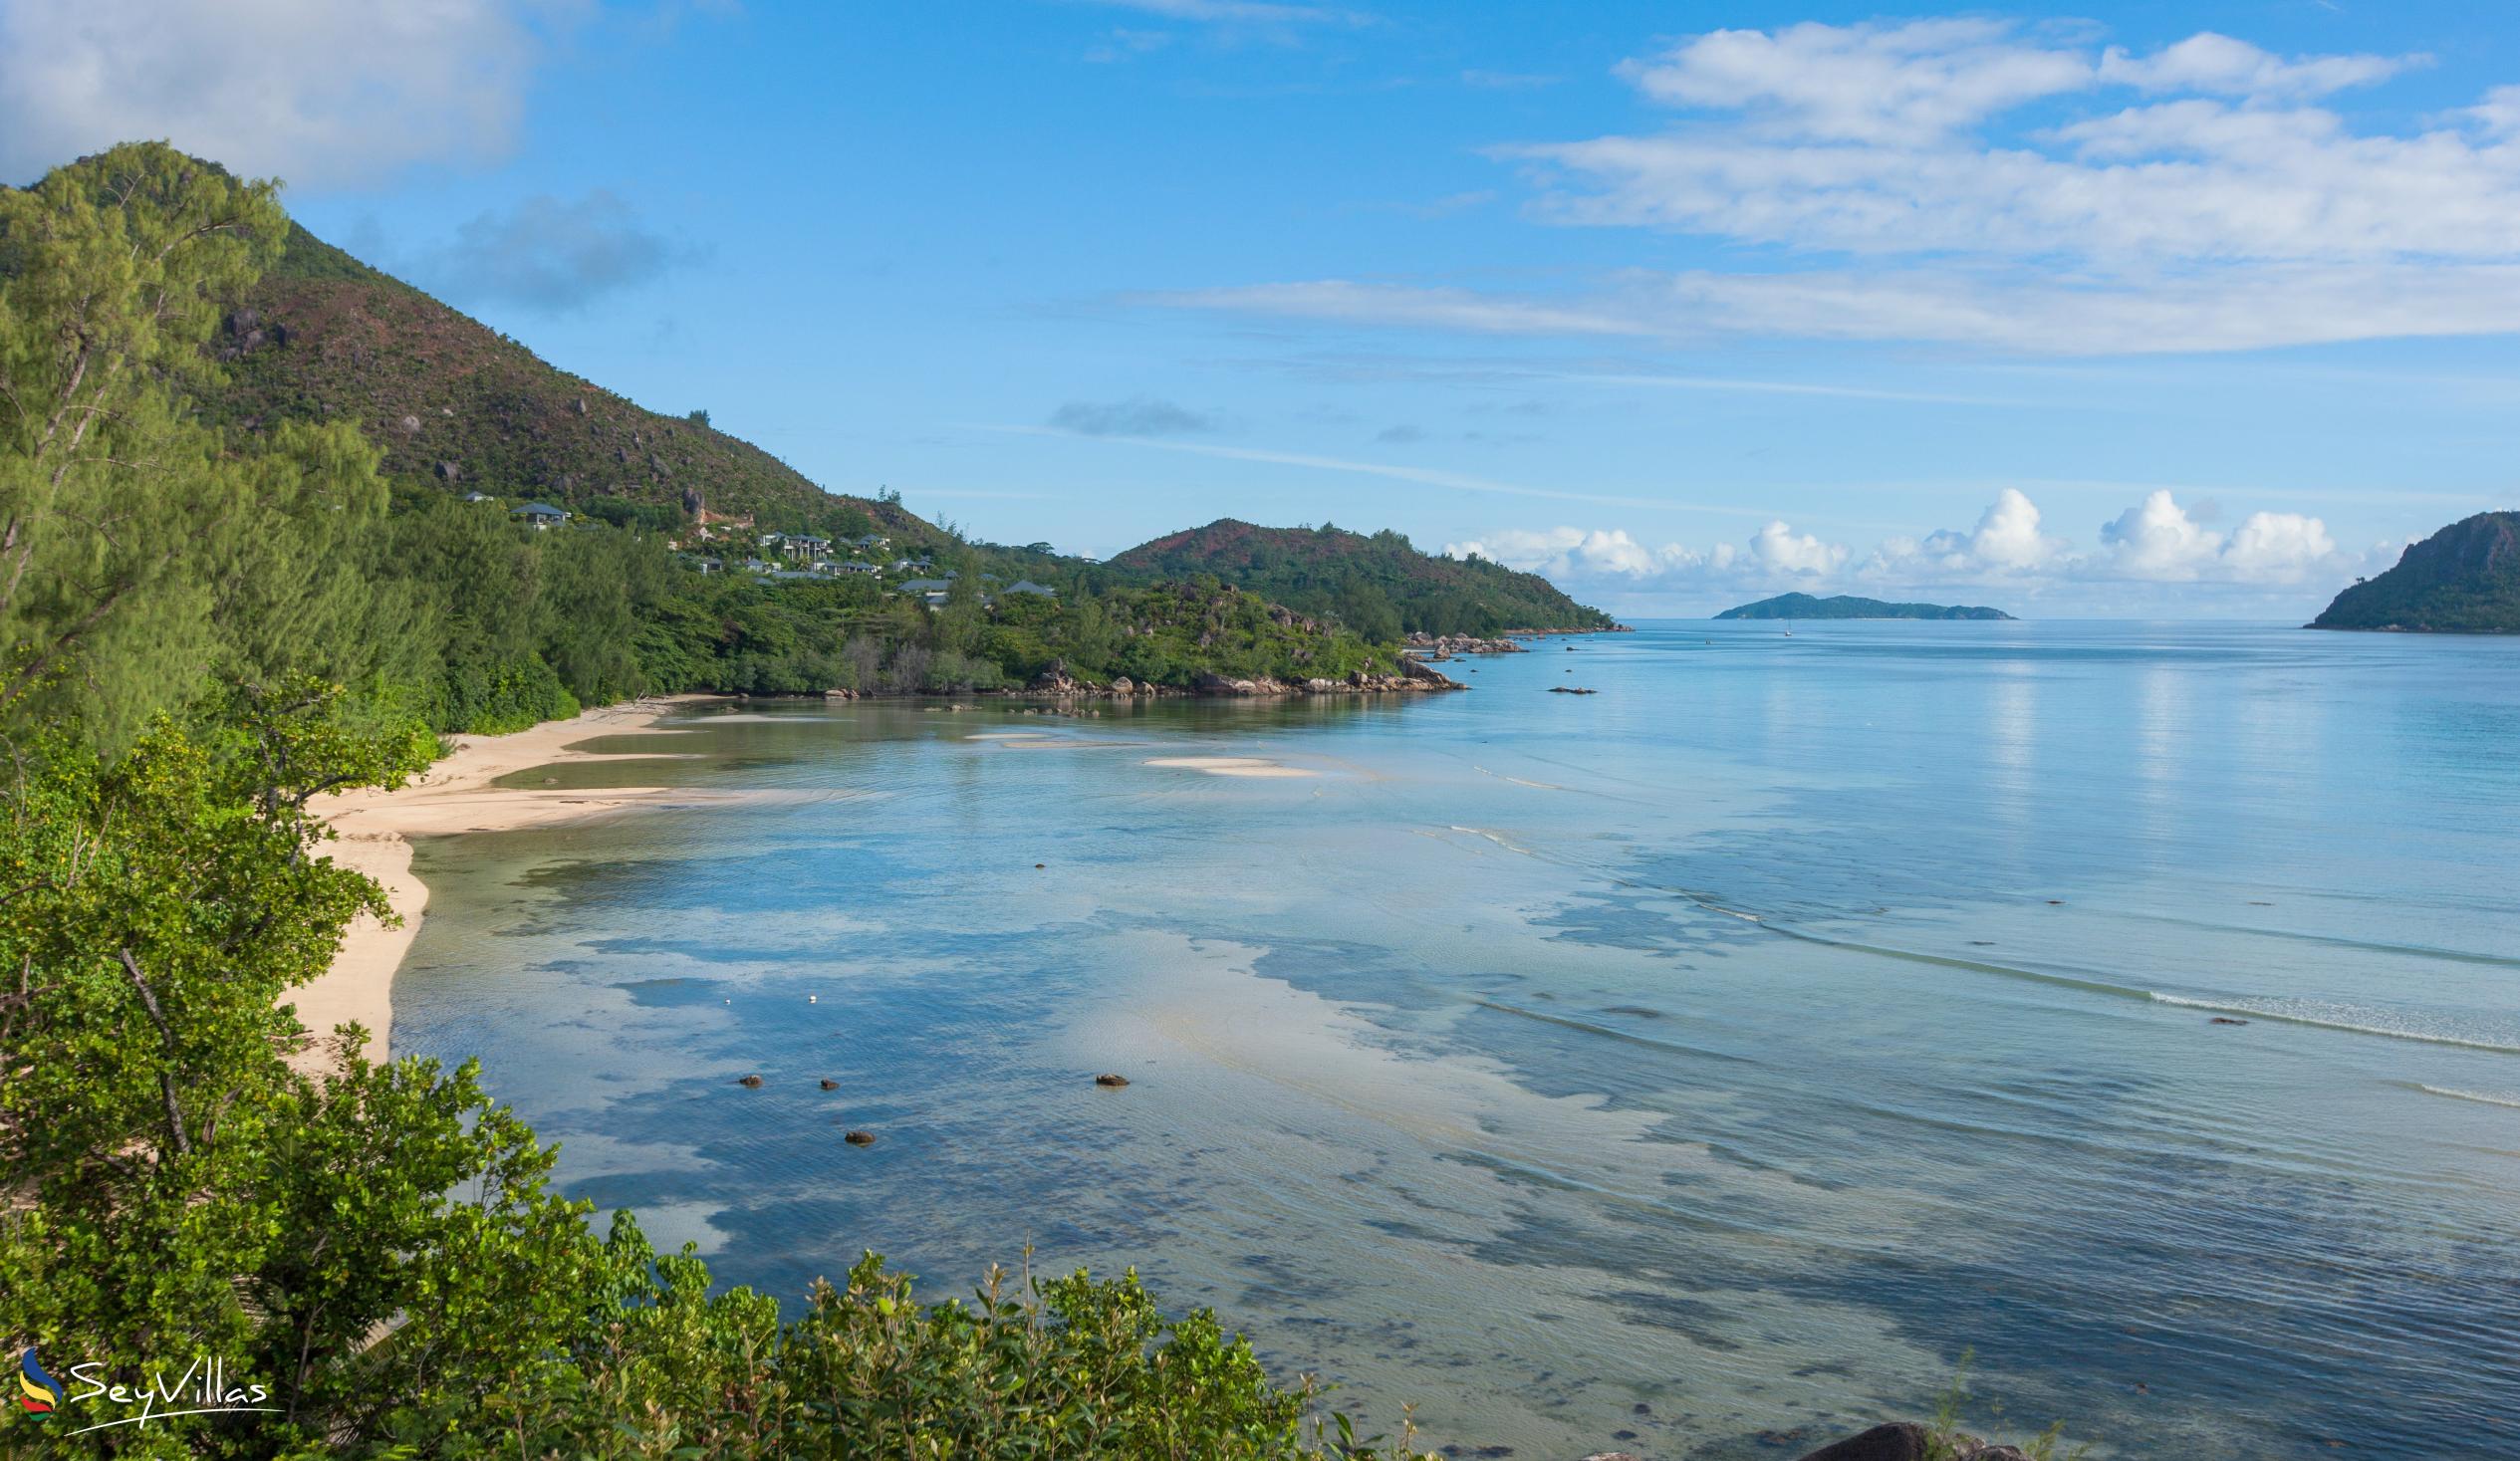 Photo 1: Anse Pasquière - Praslin (Seychelles)